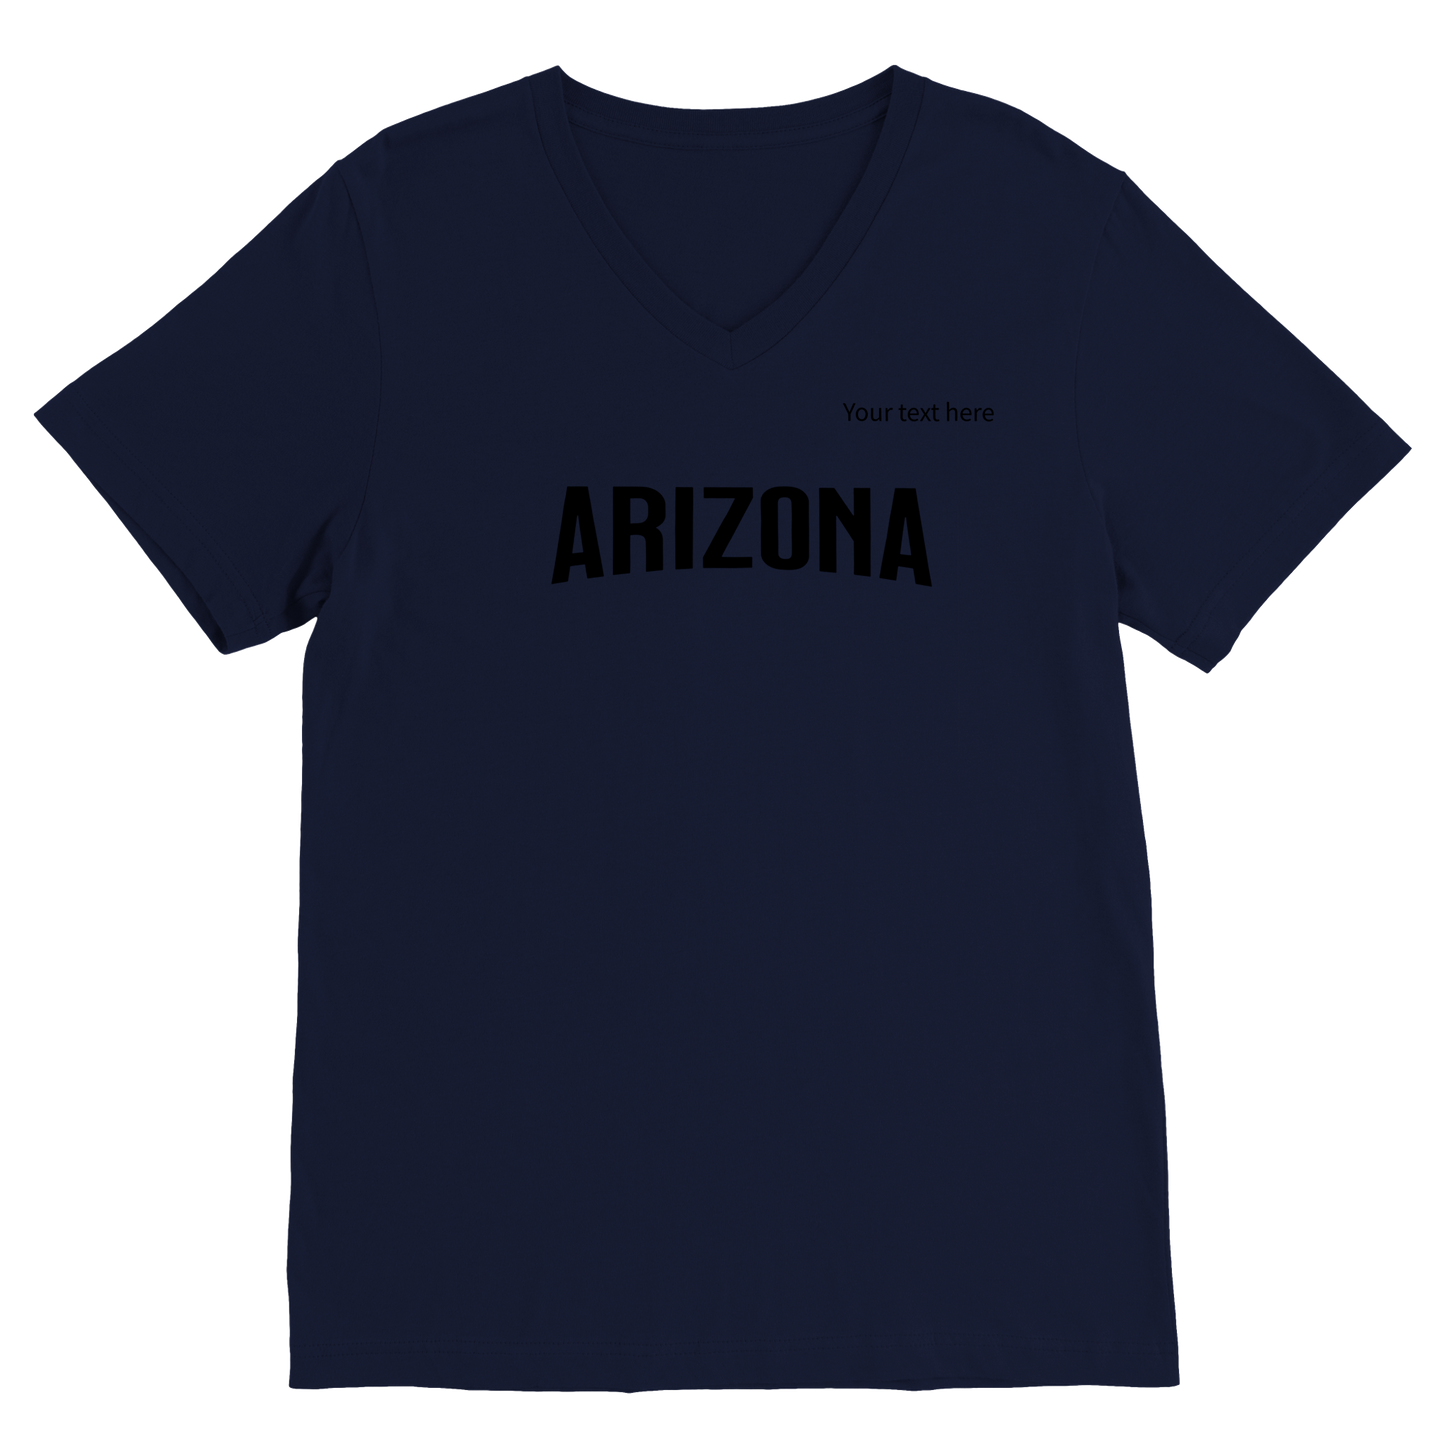 Arizona custom text Premium Unisex V-Neck T-shirt